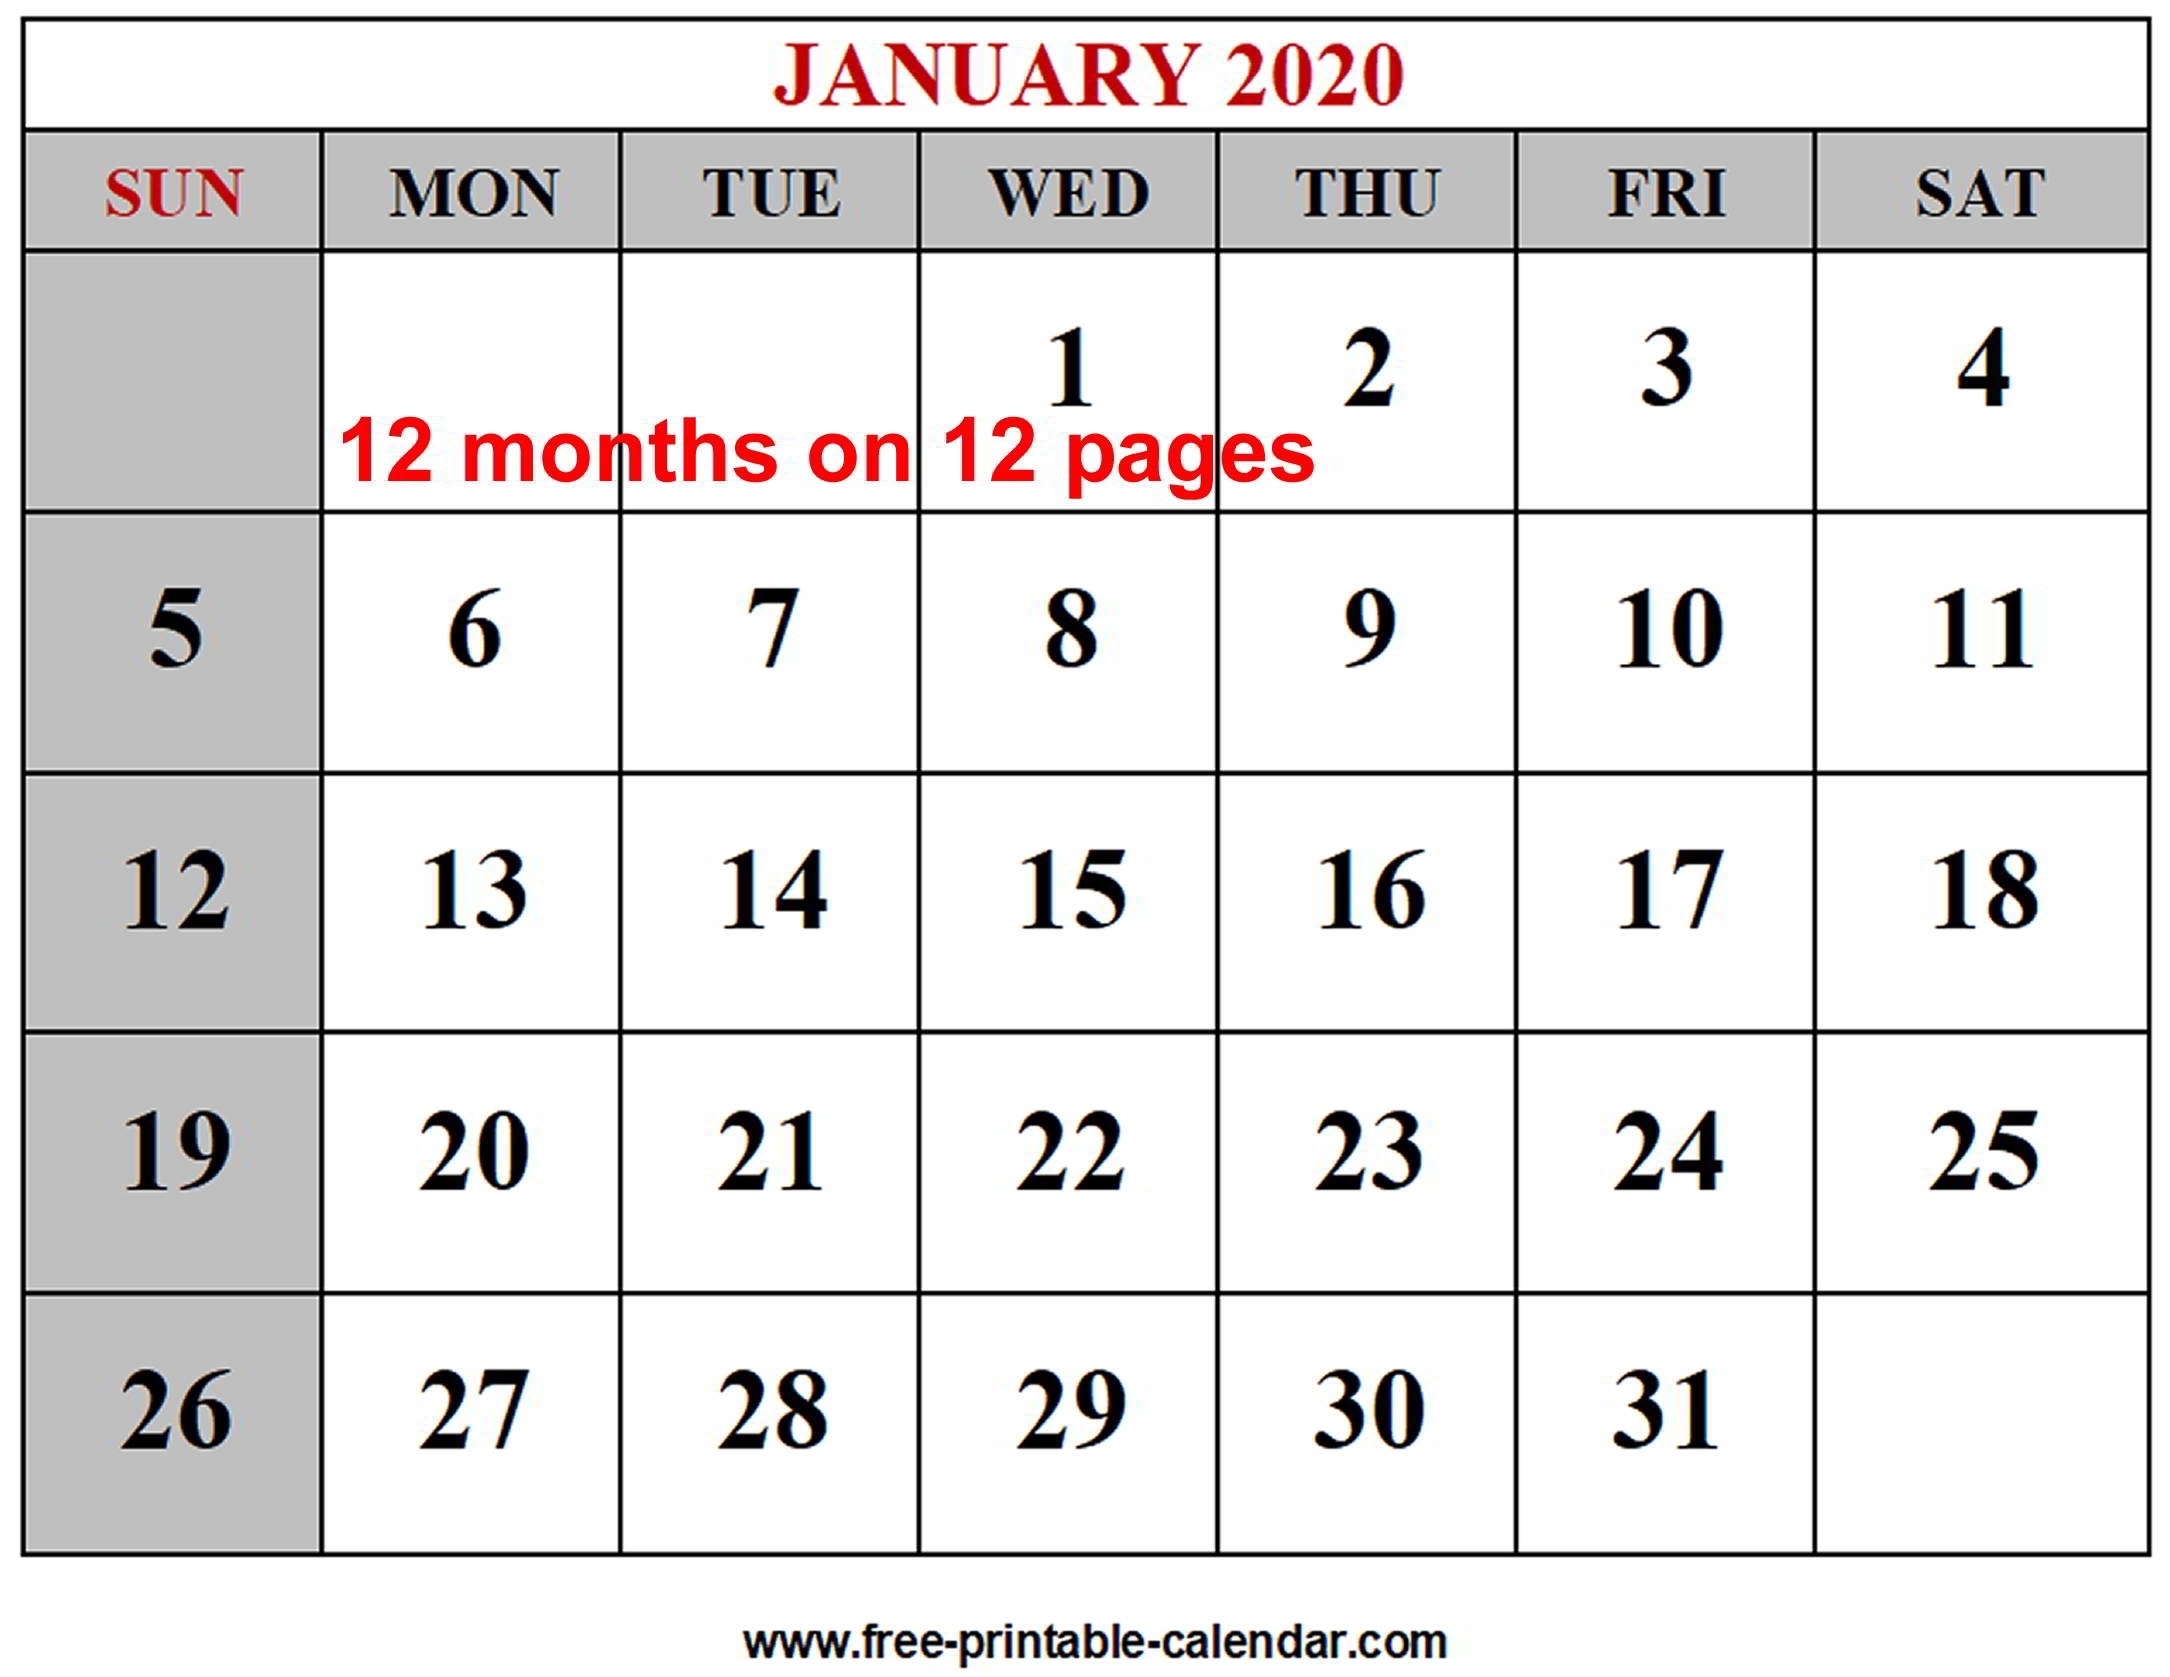 Year 2020 Calendar Templates - Free-Printable-Calendar